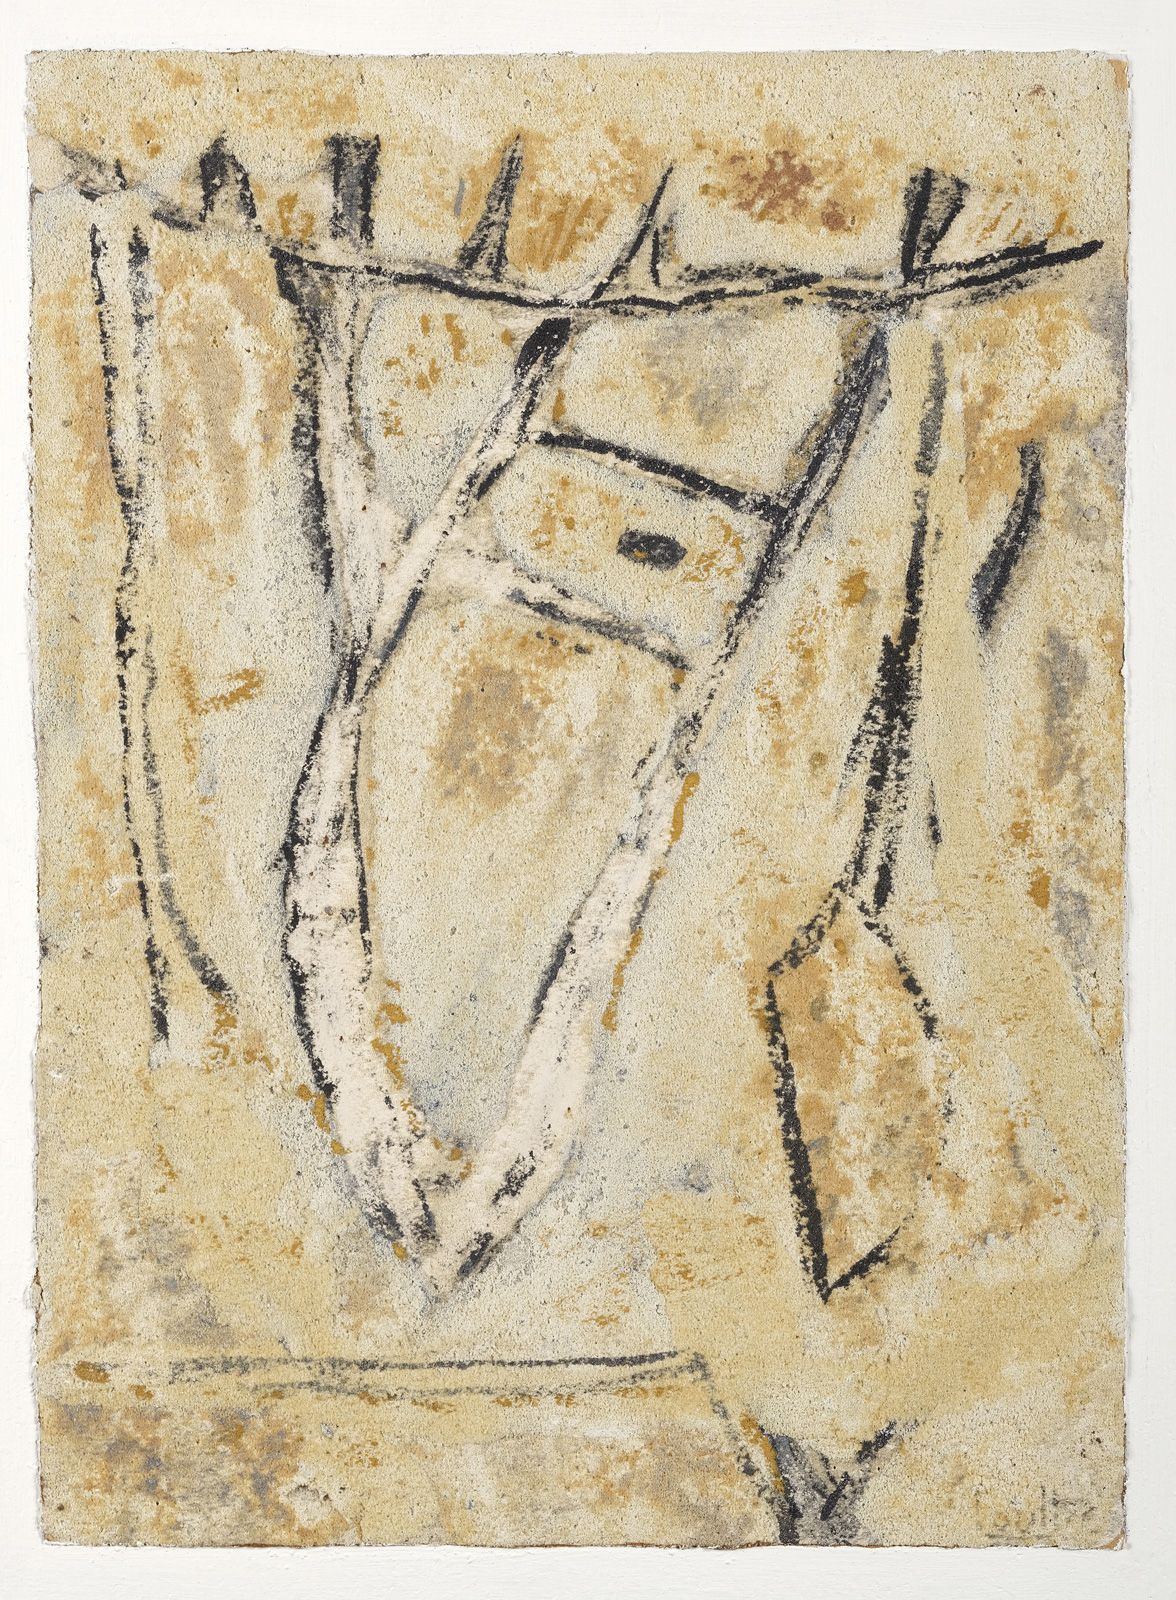 Null 沃尔夫拉姆(1926-2012)

缺少空气

纸上粘贴的混合媒介和沙子，在画板上签了名的右下方。背面有签名和题名。

38 x 28厘米

证明：阿&hellip;